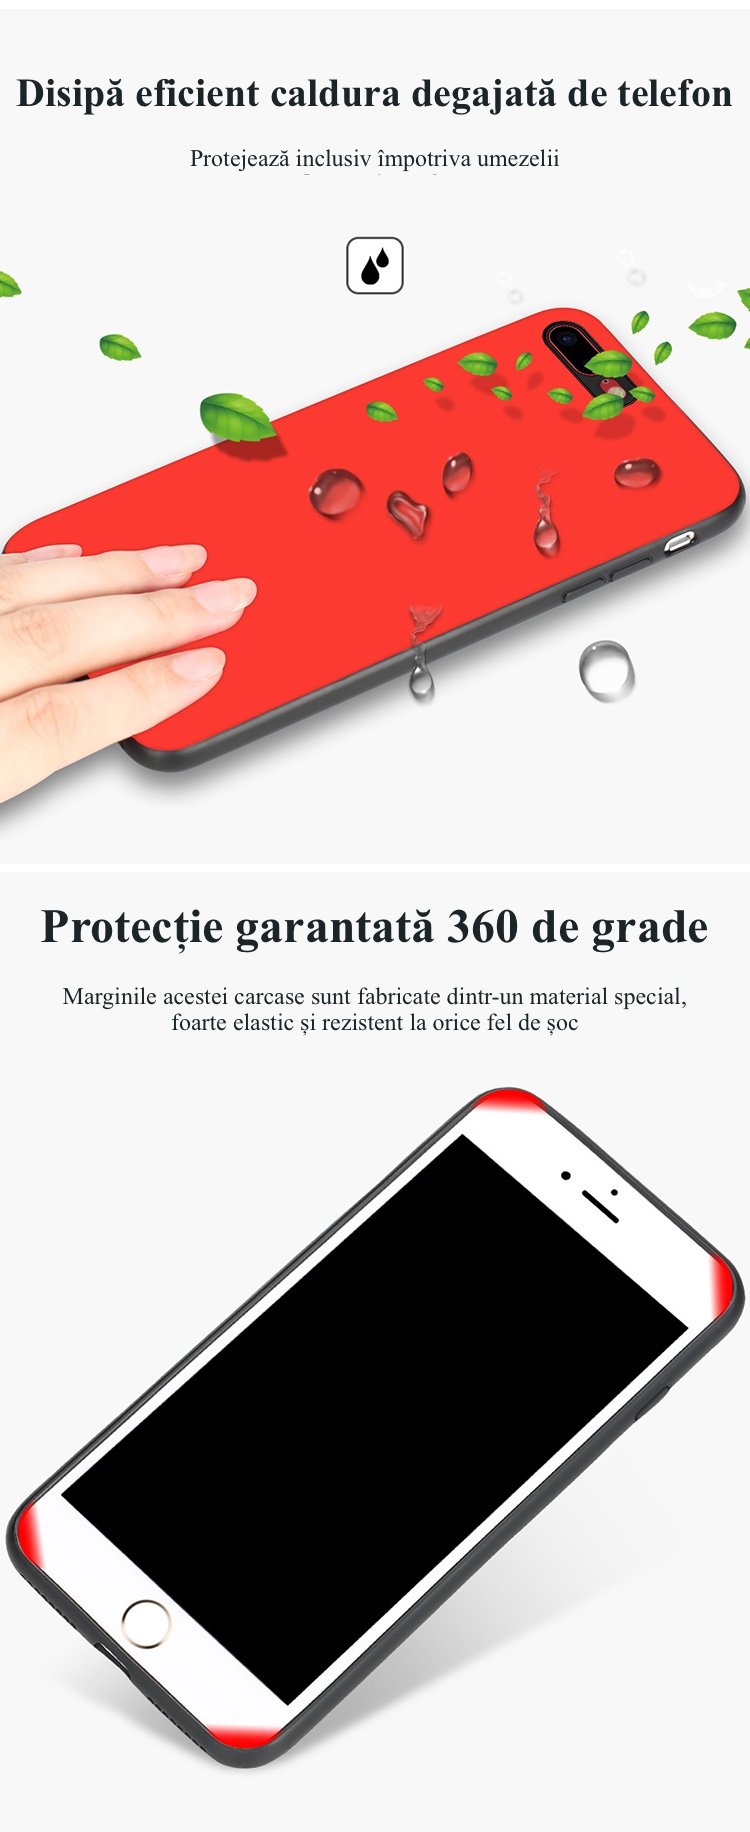 Carcasa termica protectie telefon 360 de grade